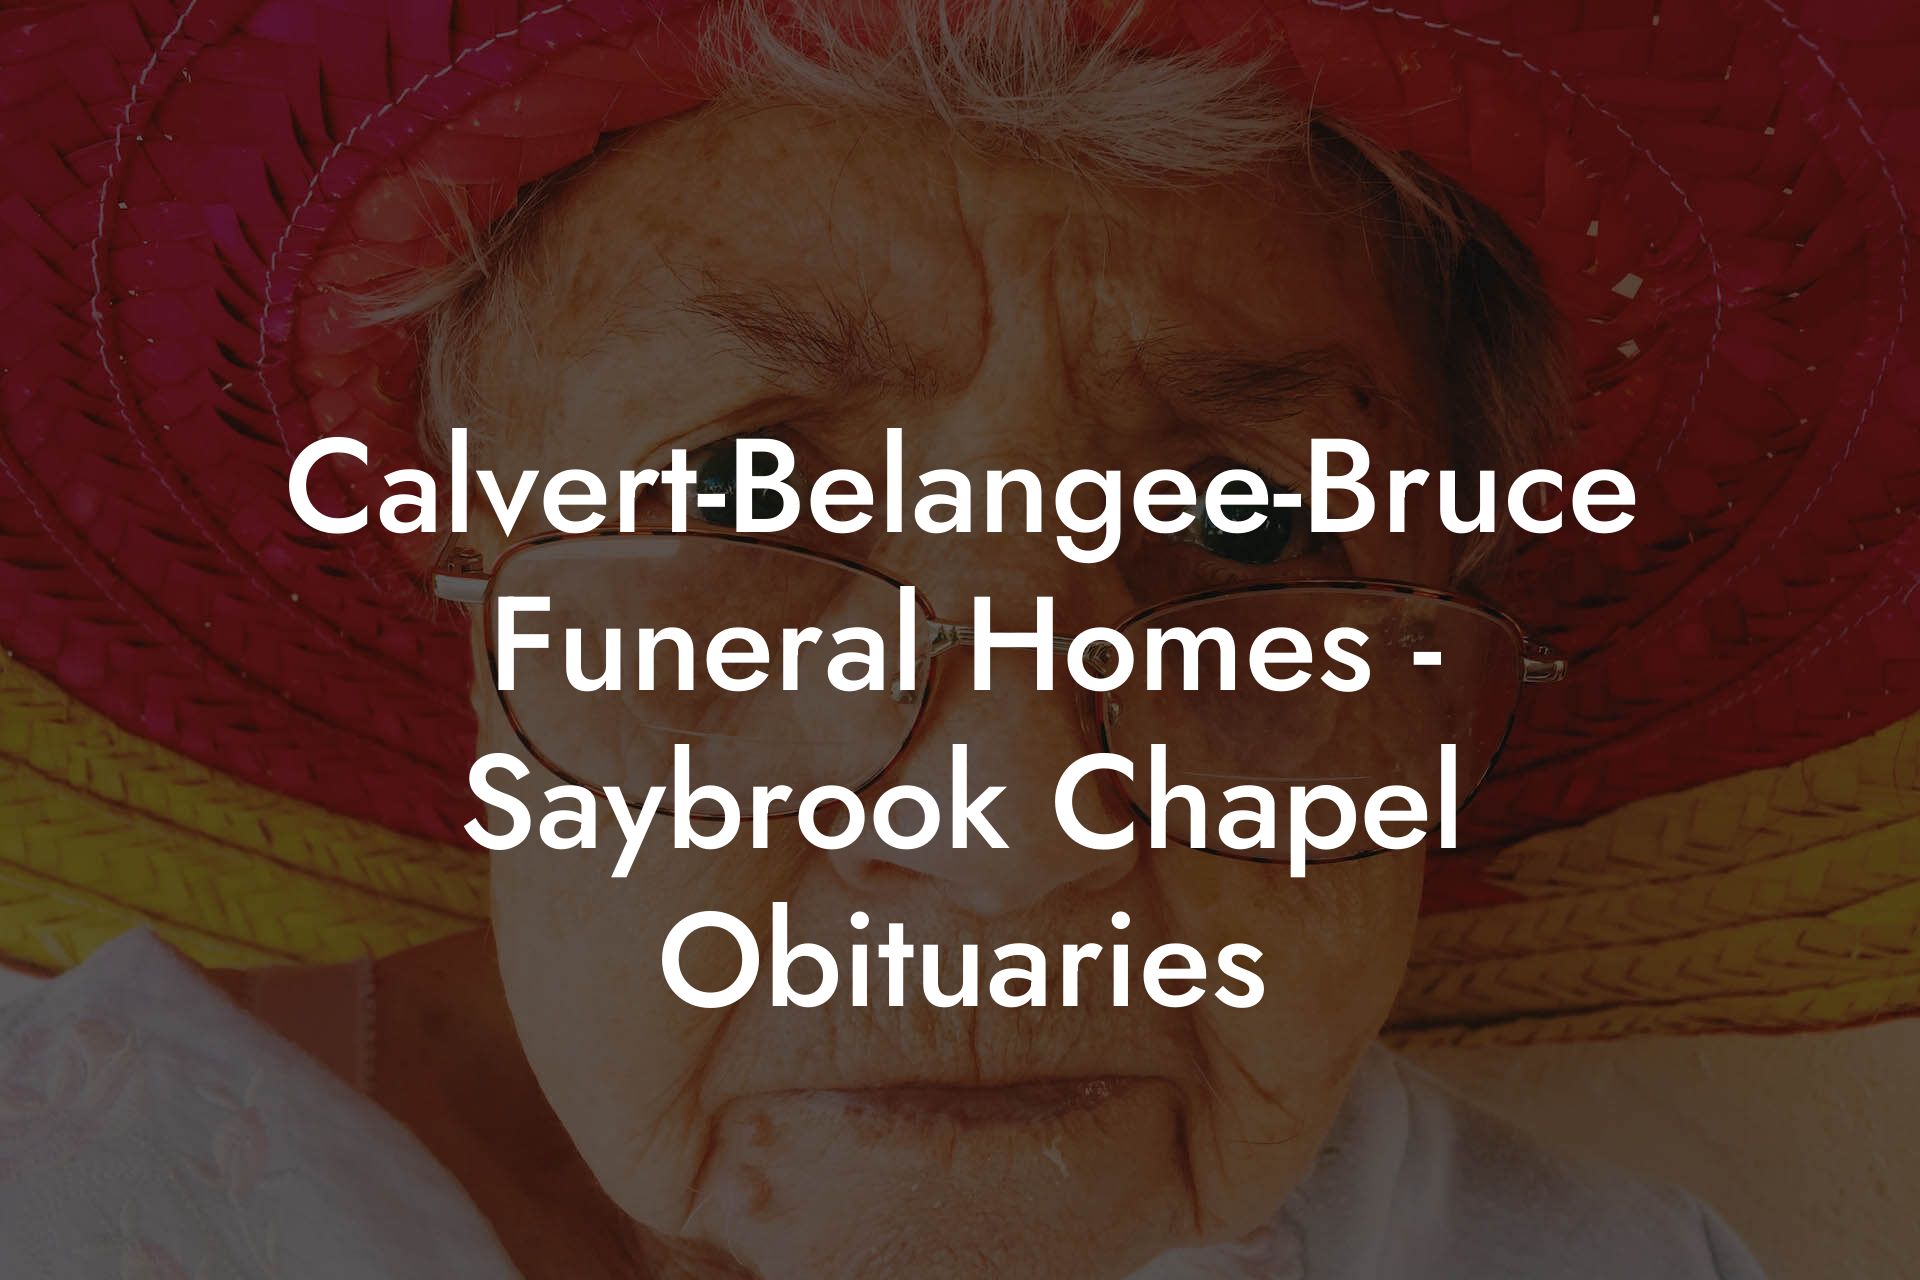 Calvert-Belangee-Bruce Funeral Homes - Saybrook Chapel Obituaries